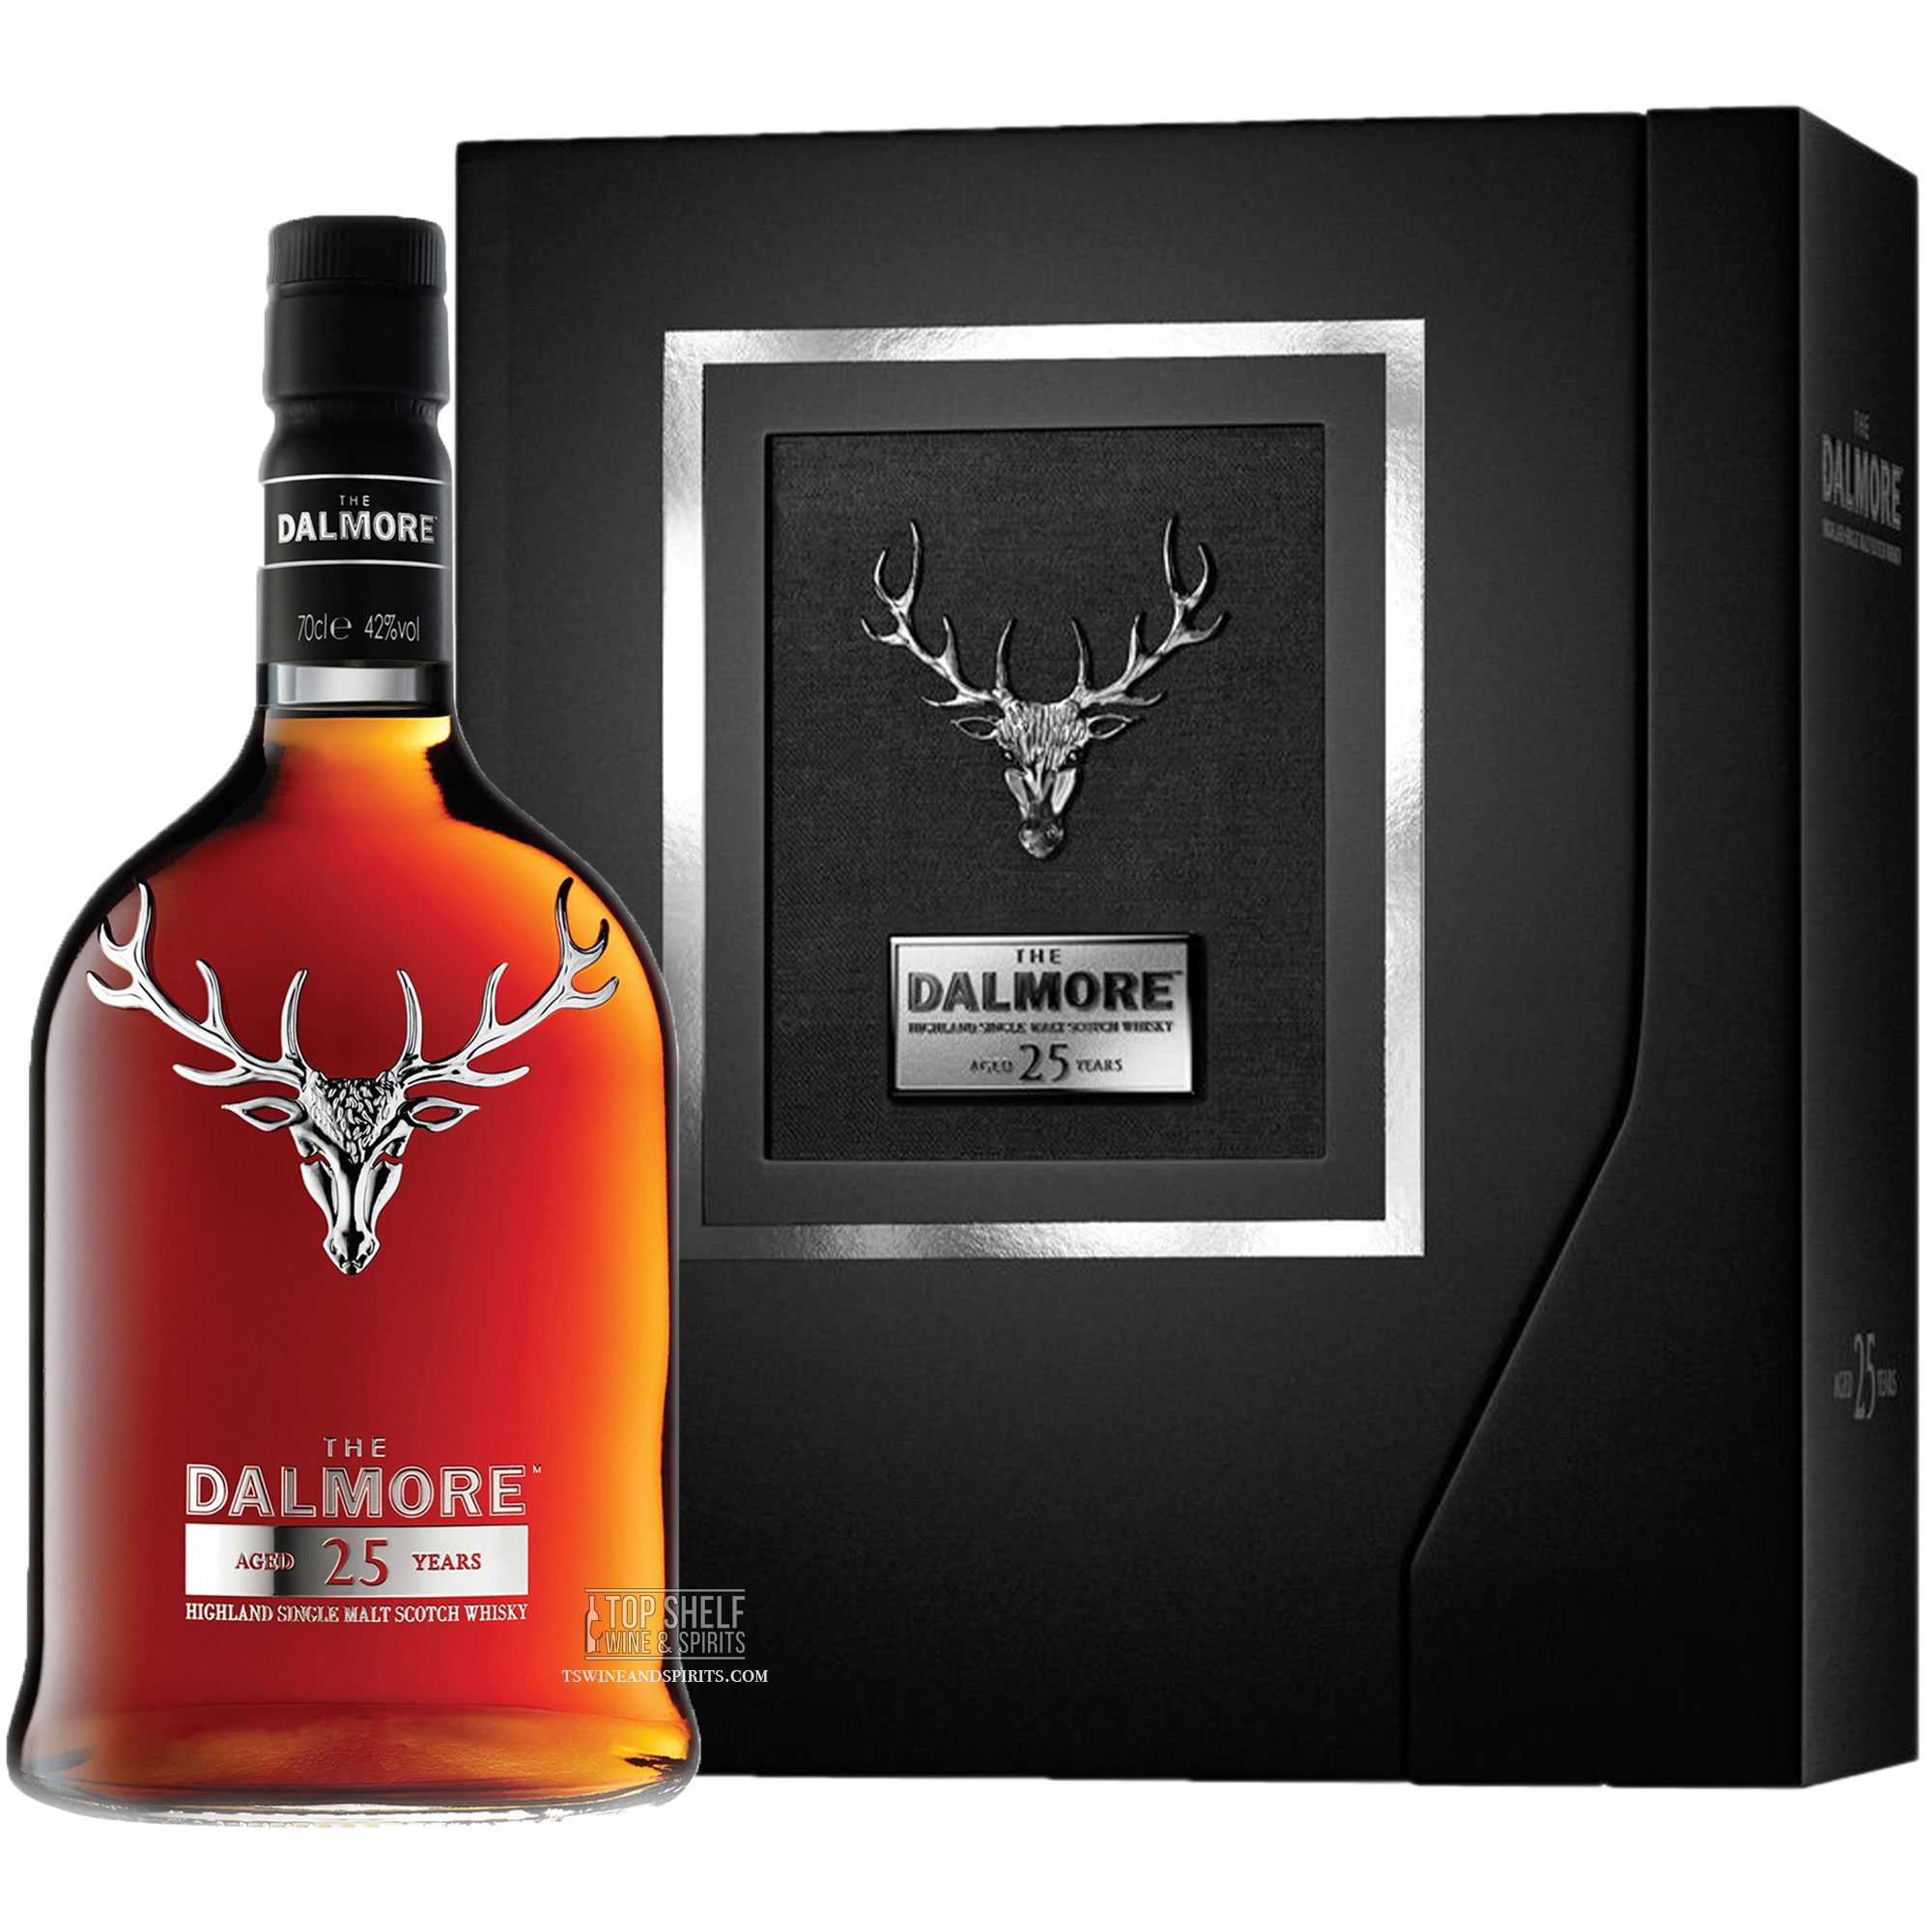 BUY] Dalmore Valour Highland Single Malt Scotch Whisky